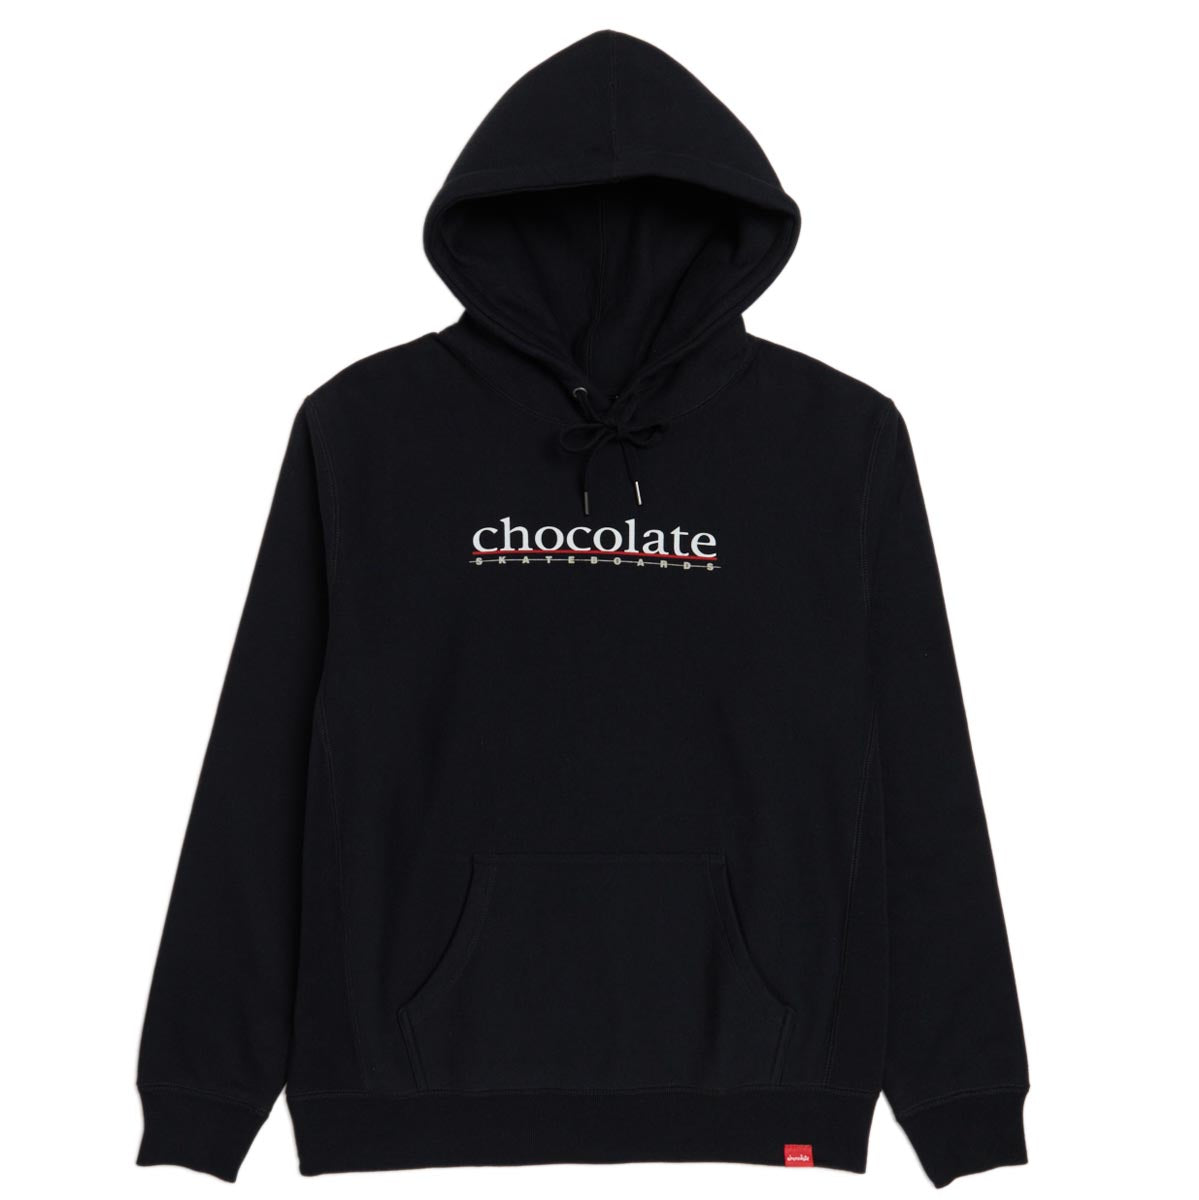 Chocolate Bar Hoodie - Black image 1